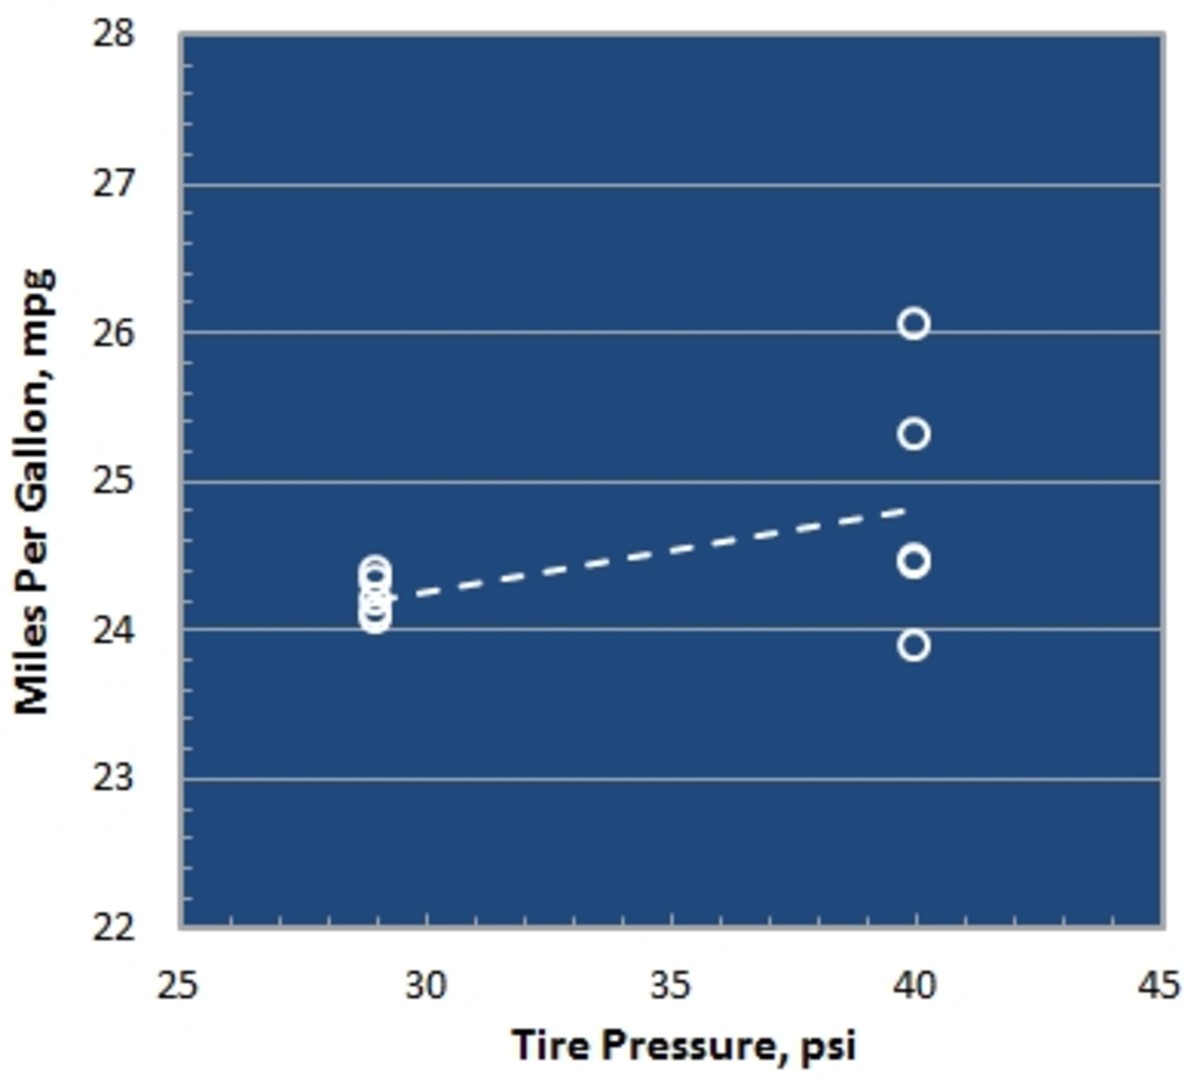 Figure 1 - Miles Per Gallon Versus Tire Pressure